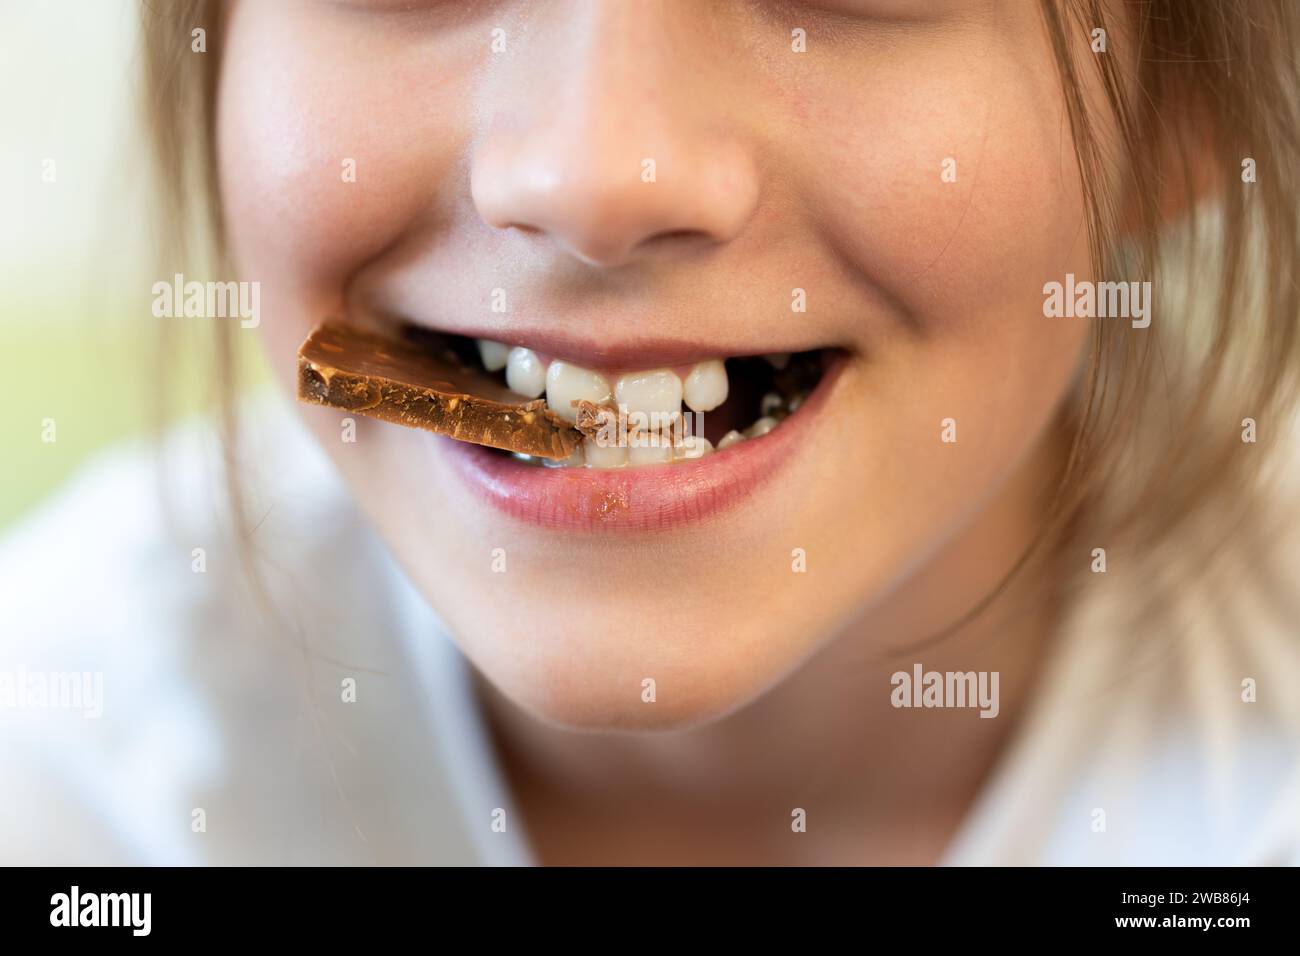 Detailed shot of a girl bites a chocolate bar. Children's teeth bite chocolate Stock Photo